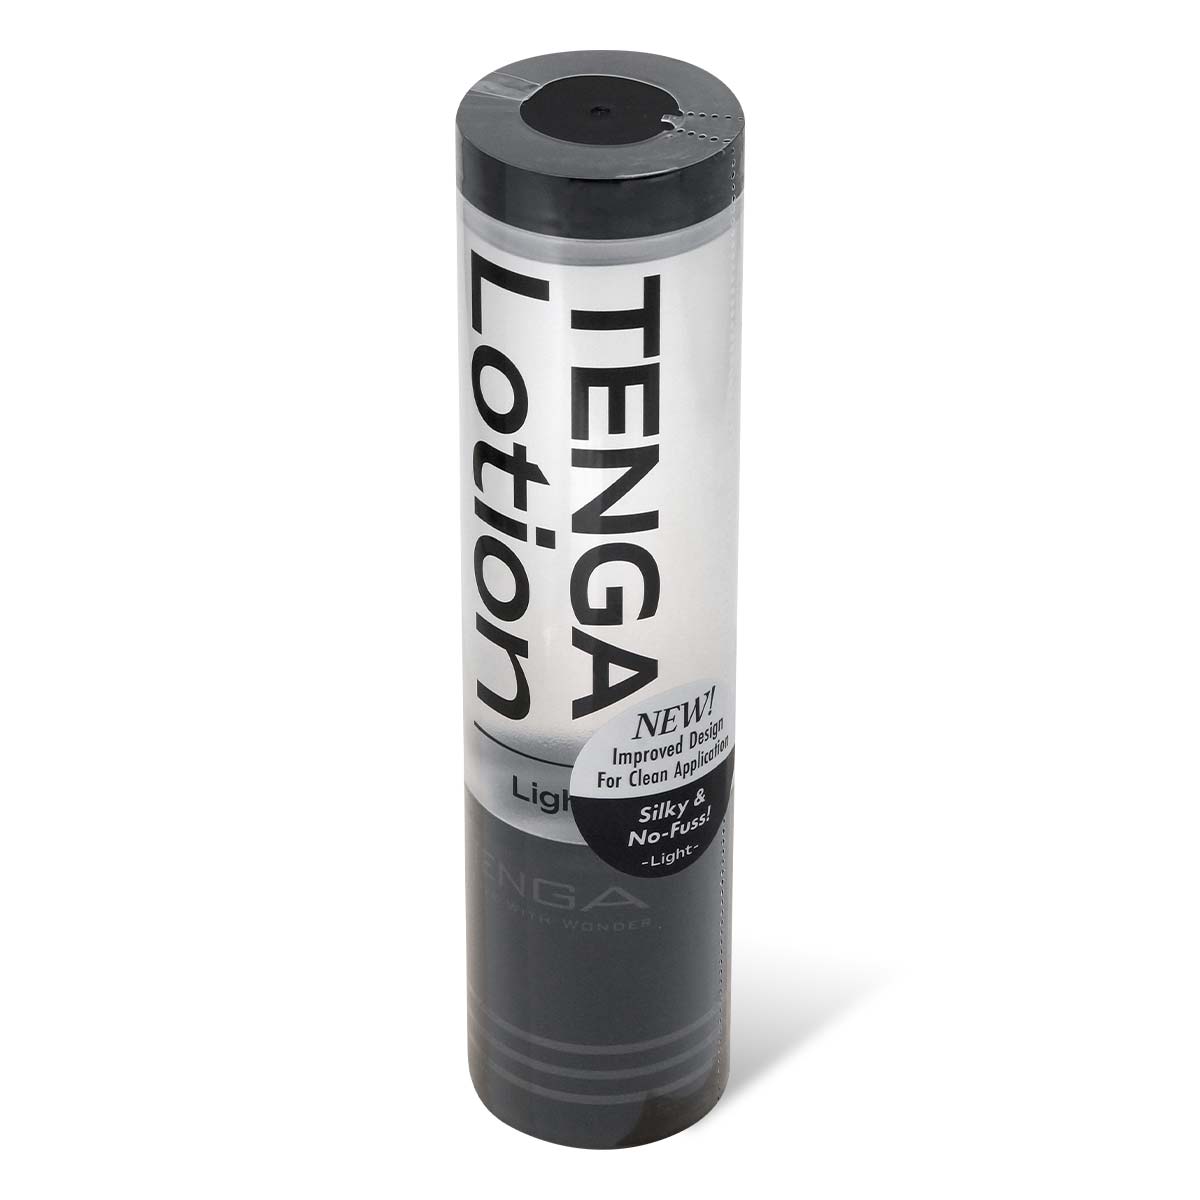 TENGA LOTION LIGHT 170ml 水性潤滑液-p_1